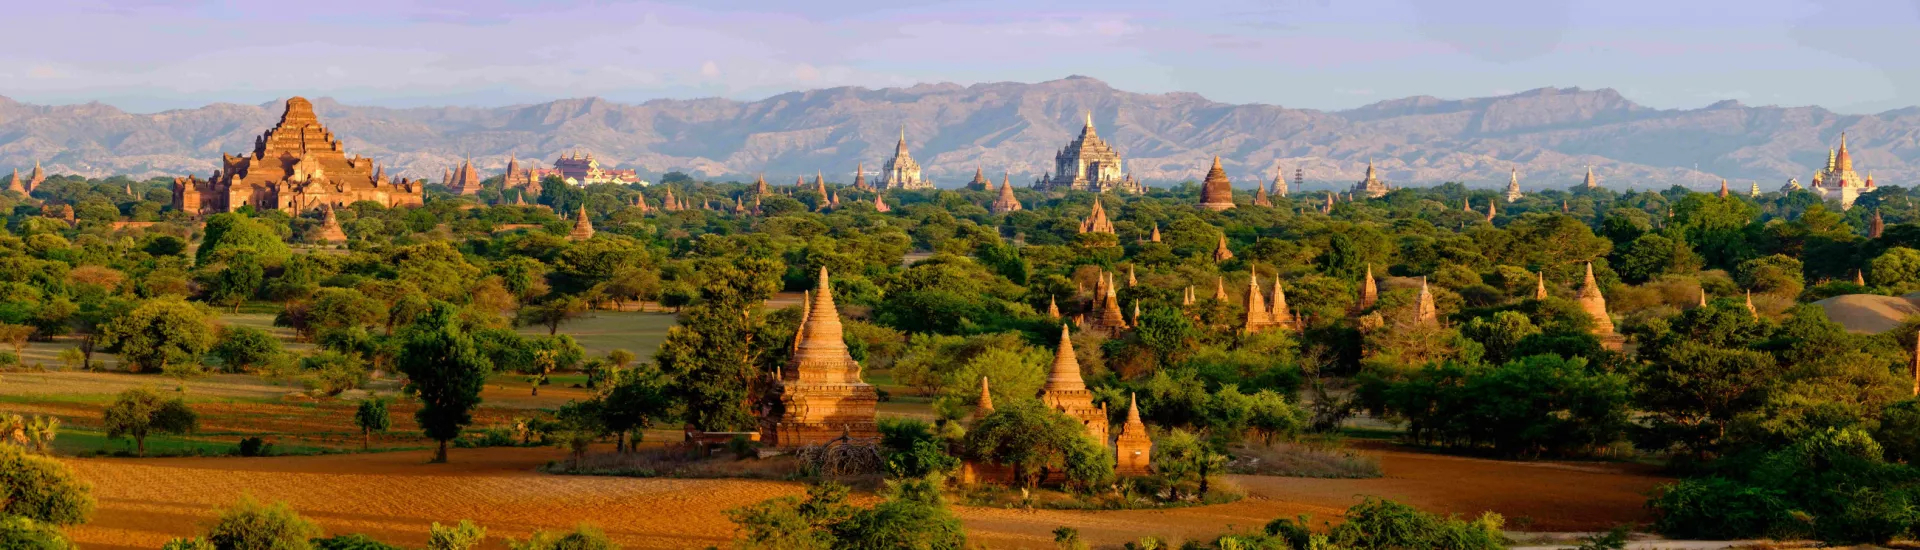 Panoramic landscape view of old temples in Bagan, Myanmar